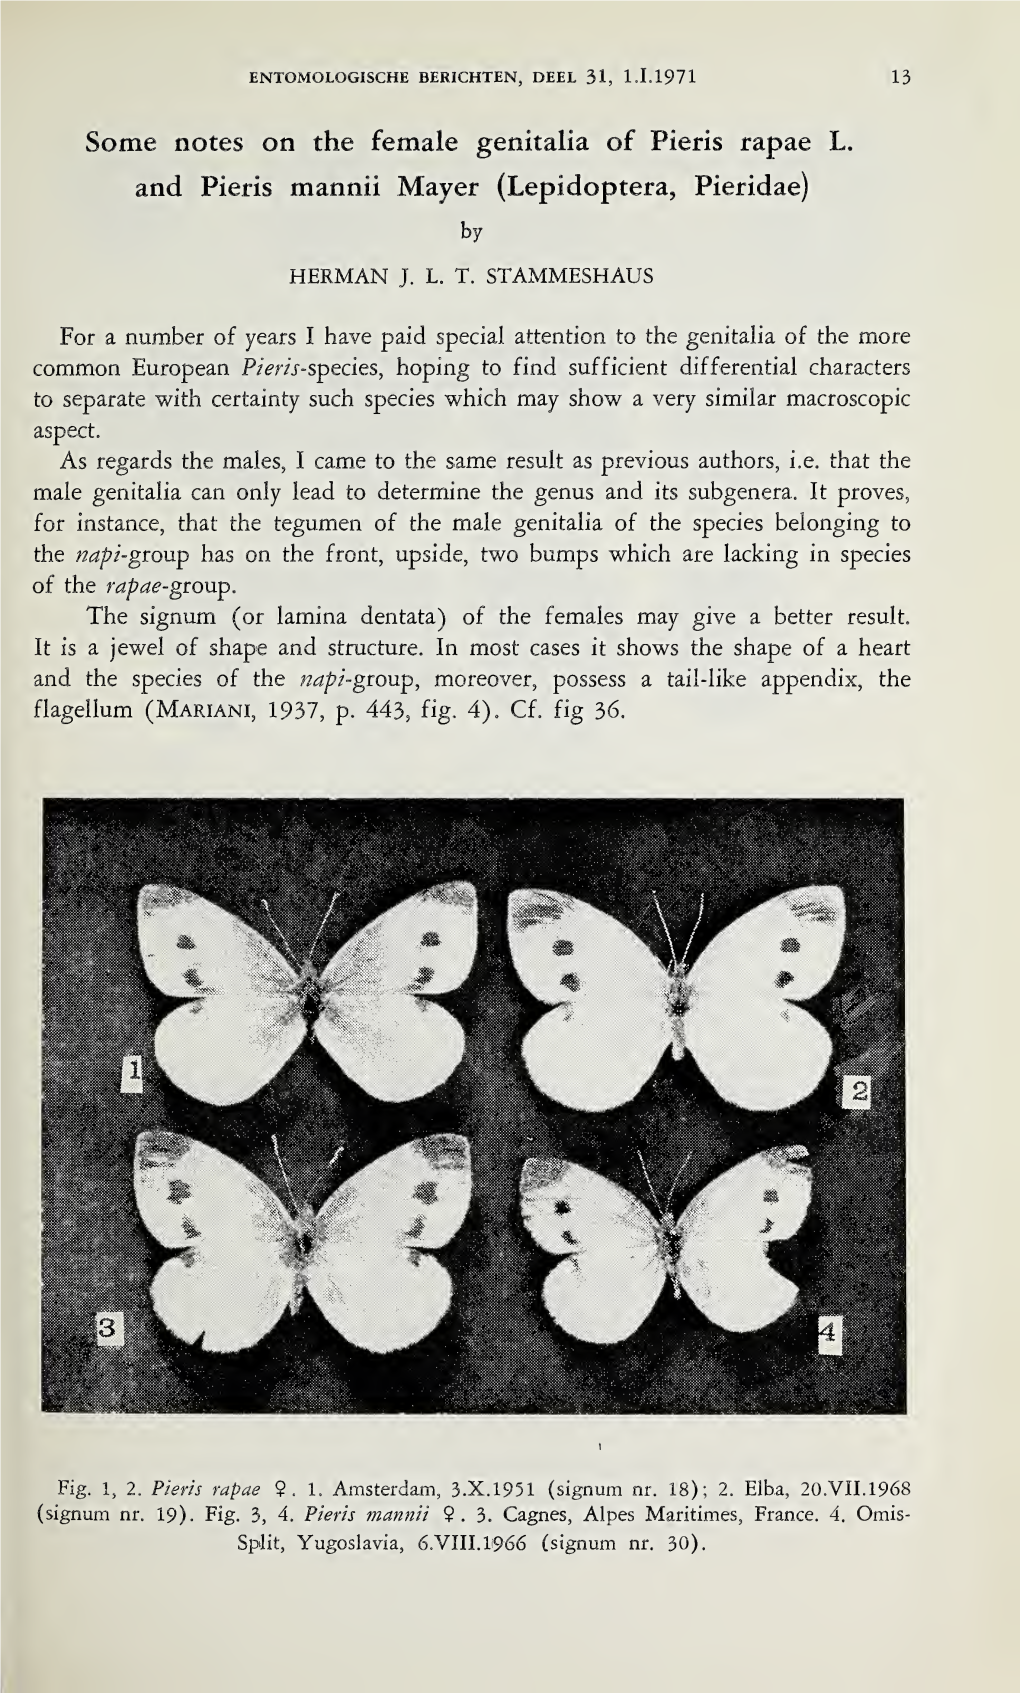 Some Notes on the Female Genitalia of Pieris Rapae L. and Pieris Mannii Mayer (Lepidoptera, Pieridae)